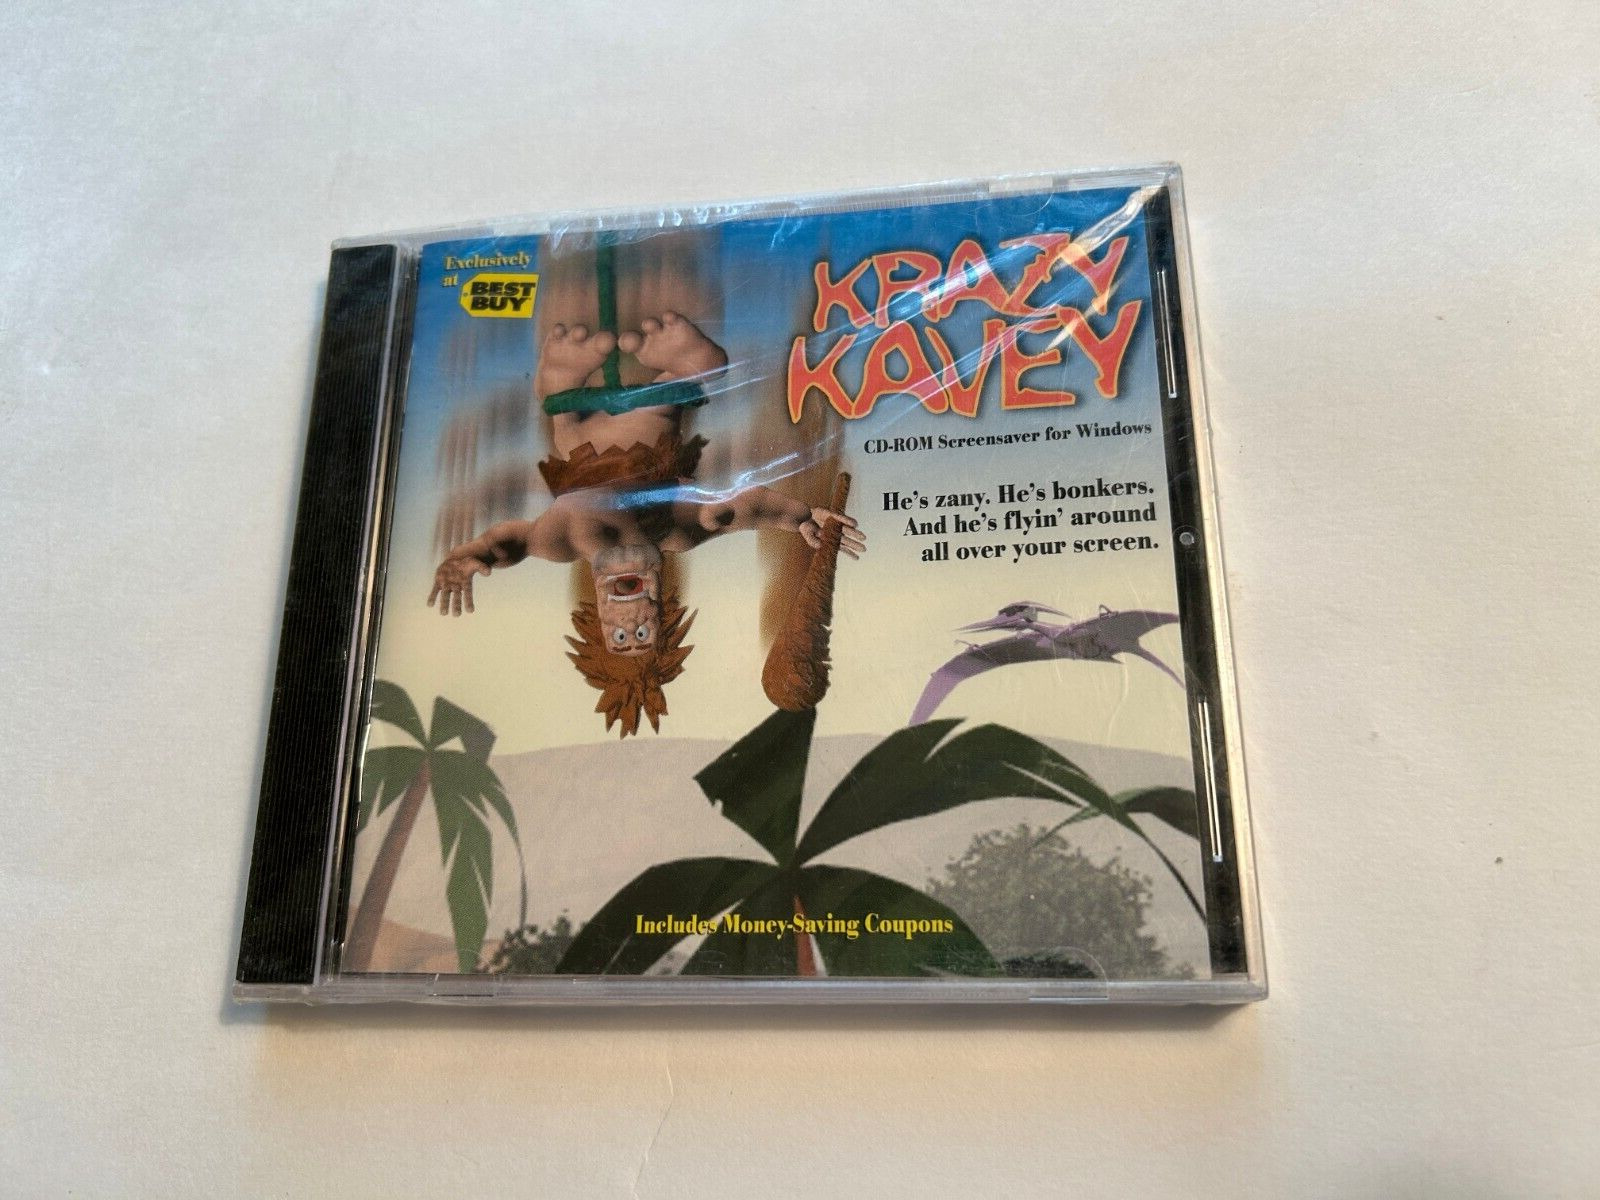 CD-ROM Screensaver for Windows, Krazy Kavey, Factory Sealed Master Tone NOS VTG